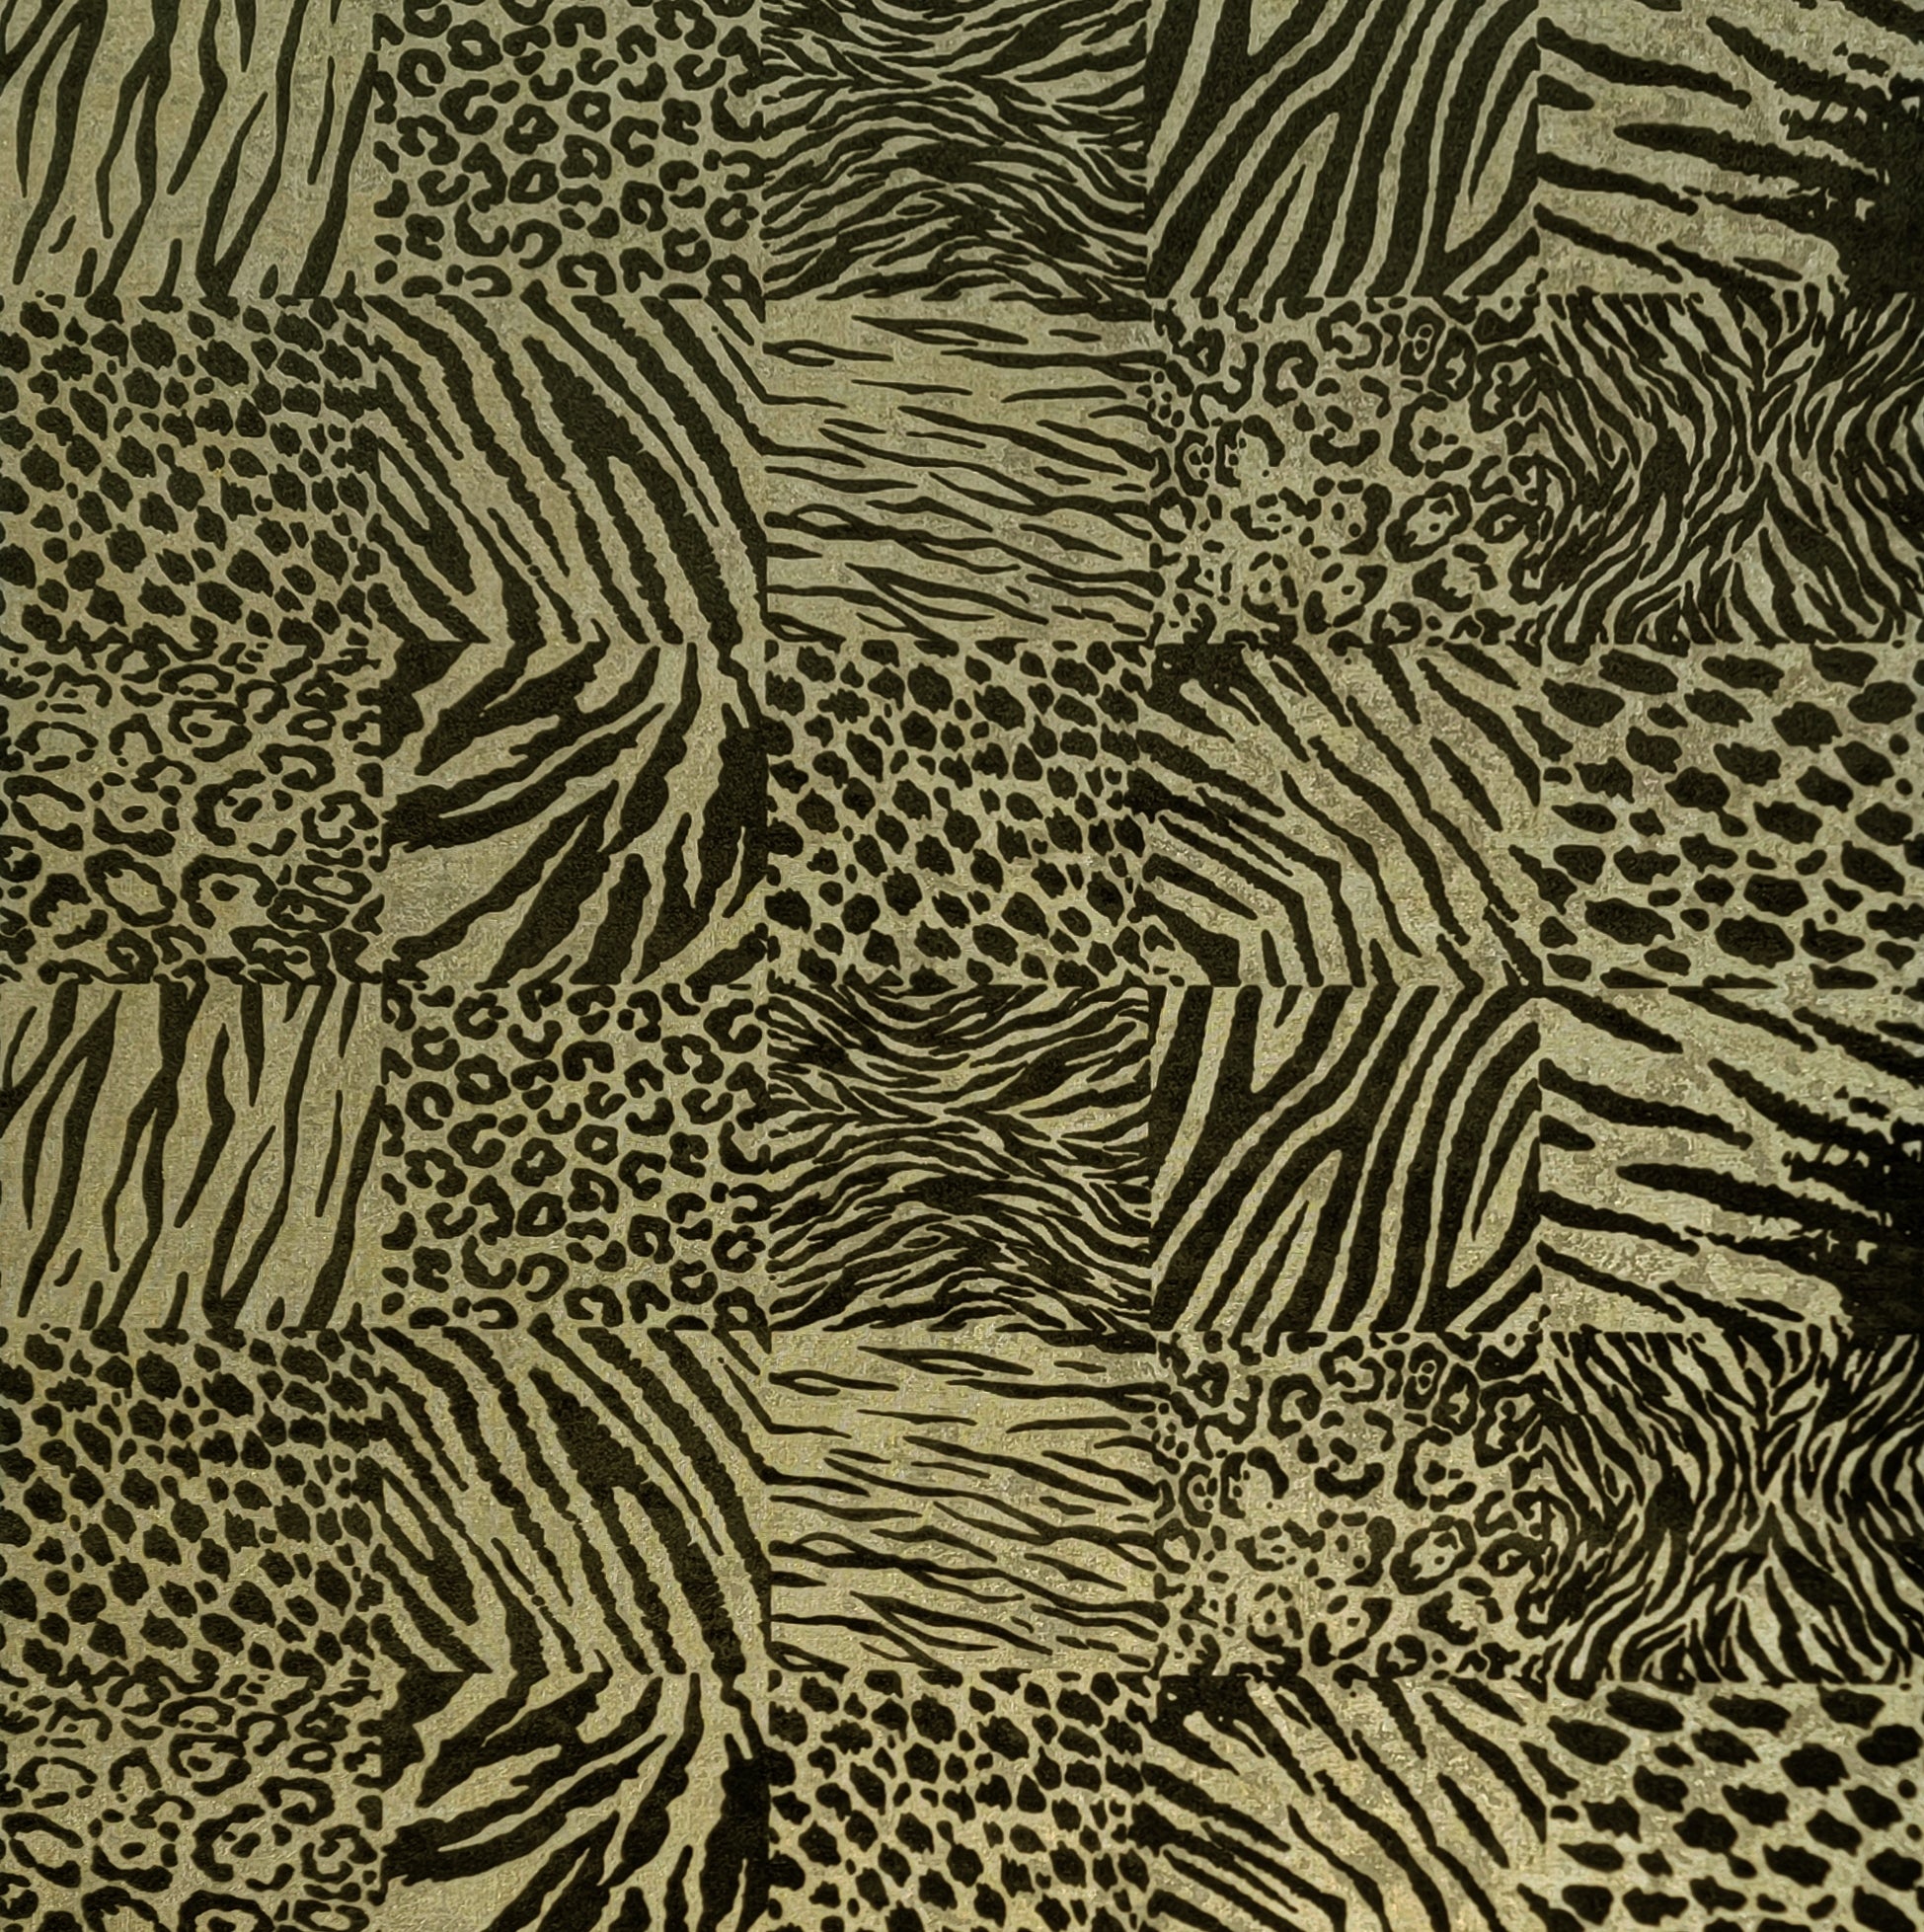 Animal prints Wallpaper at, Cheetah Print Wallpaper